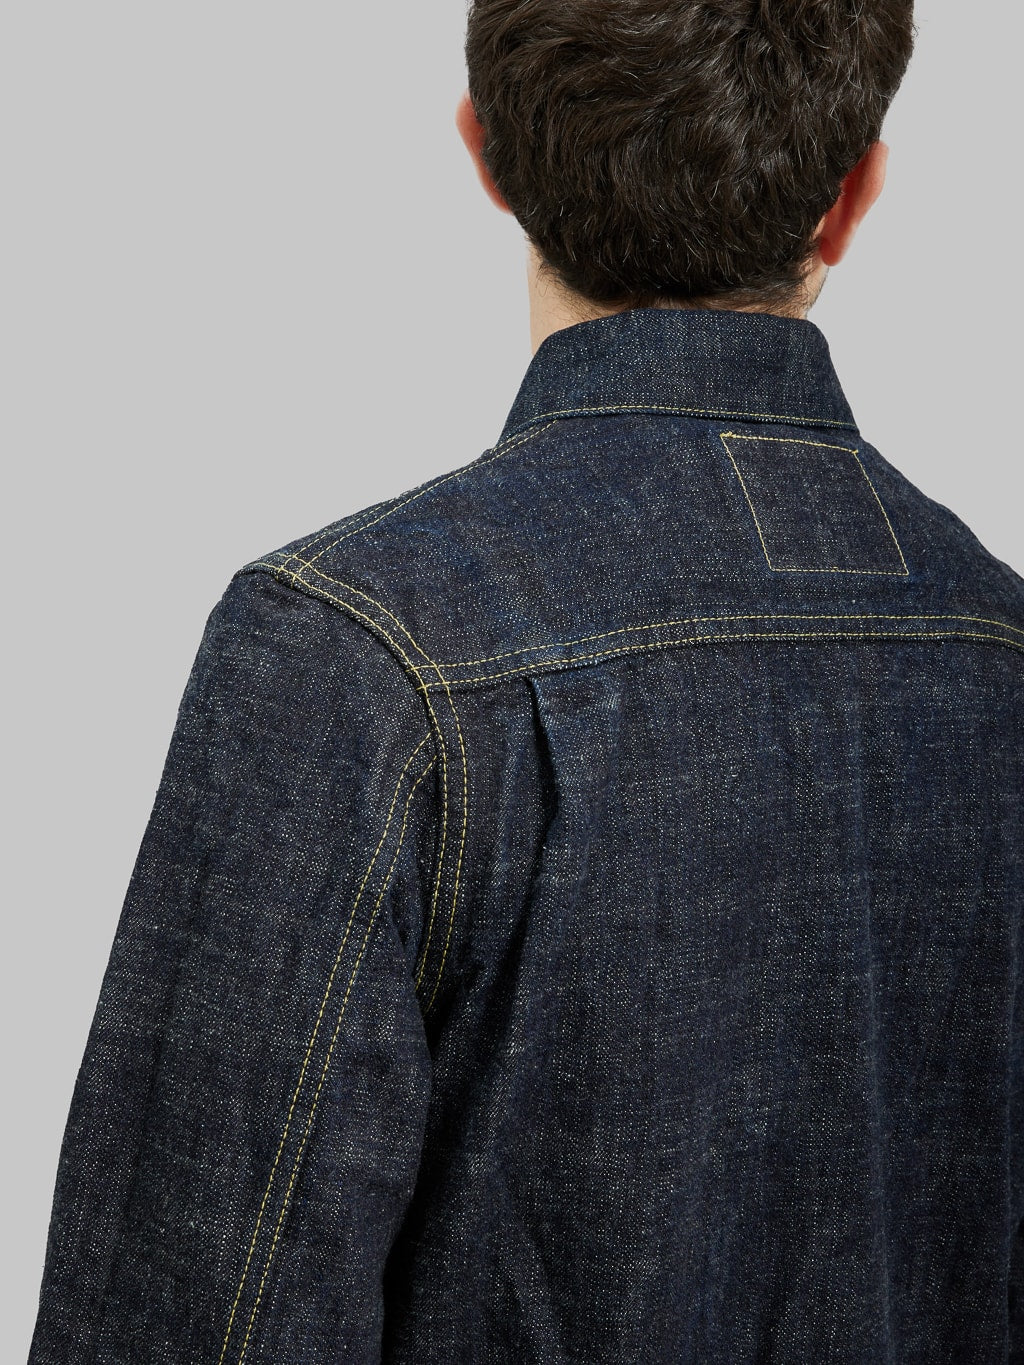 Fob factory Type III denim jacket sleeve stitching detail